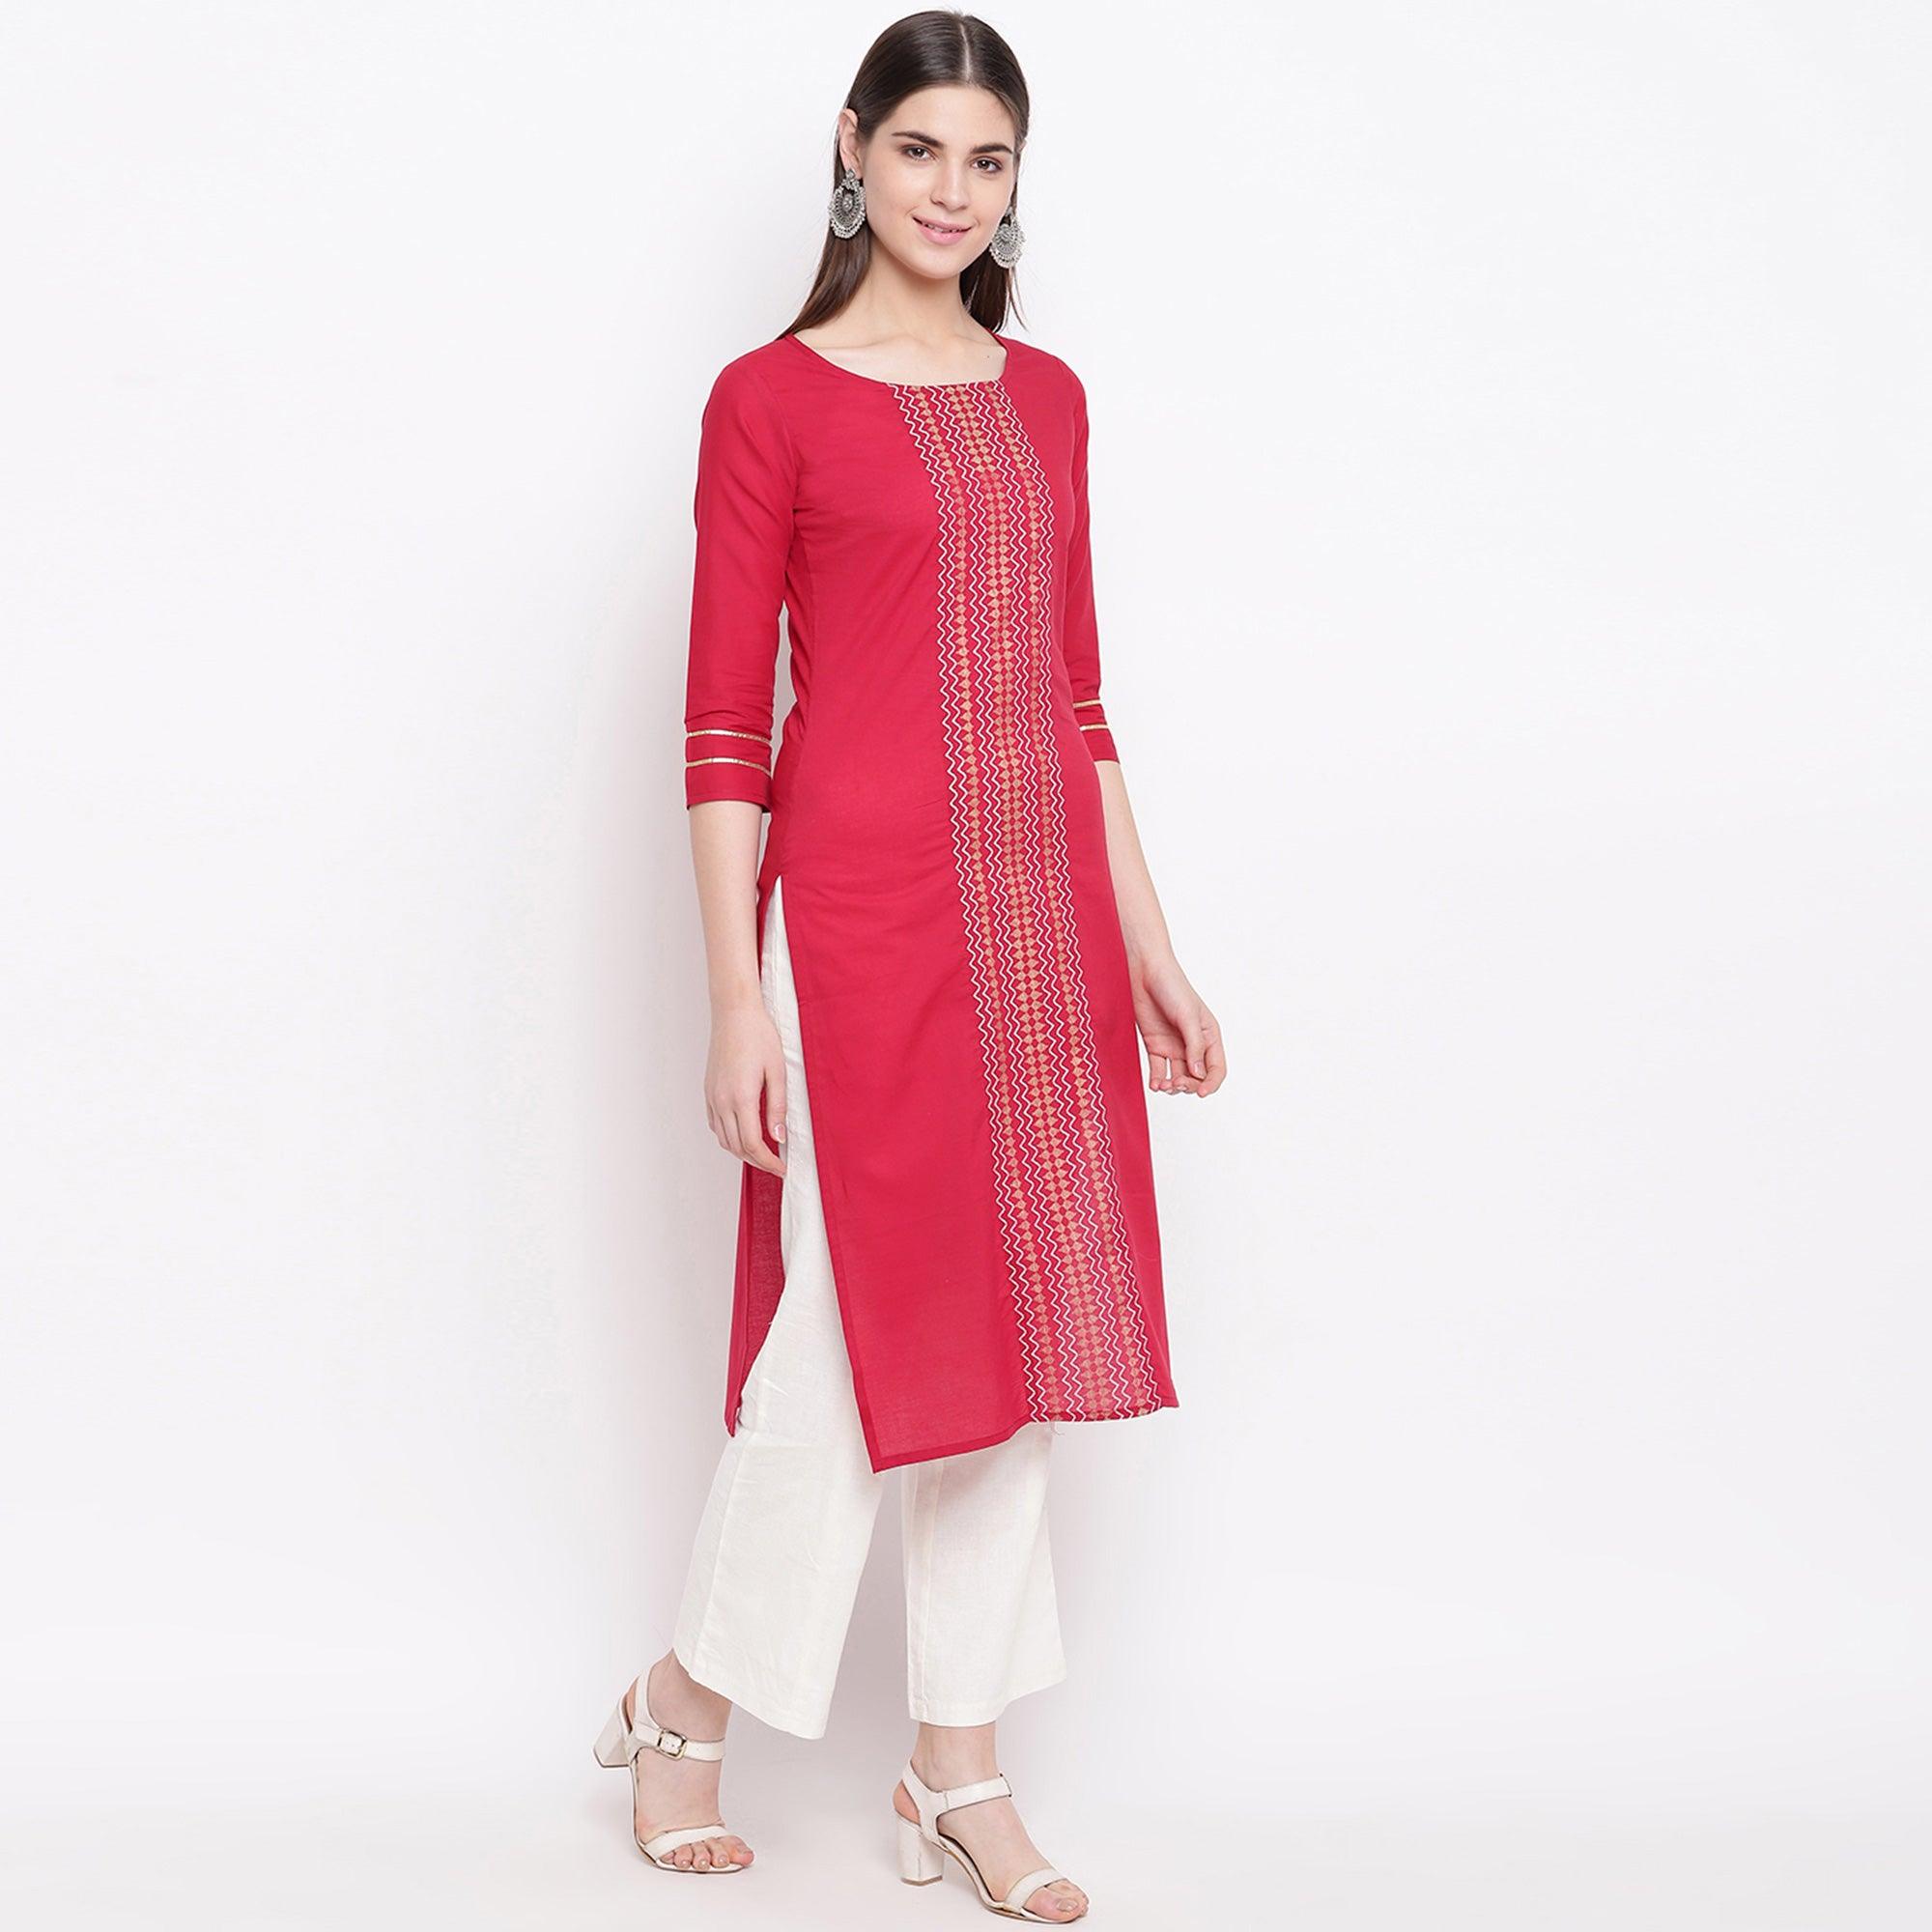 Delightful Red Colored Casual Wear Printed Cotton Kurti - Peachmode